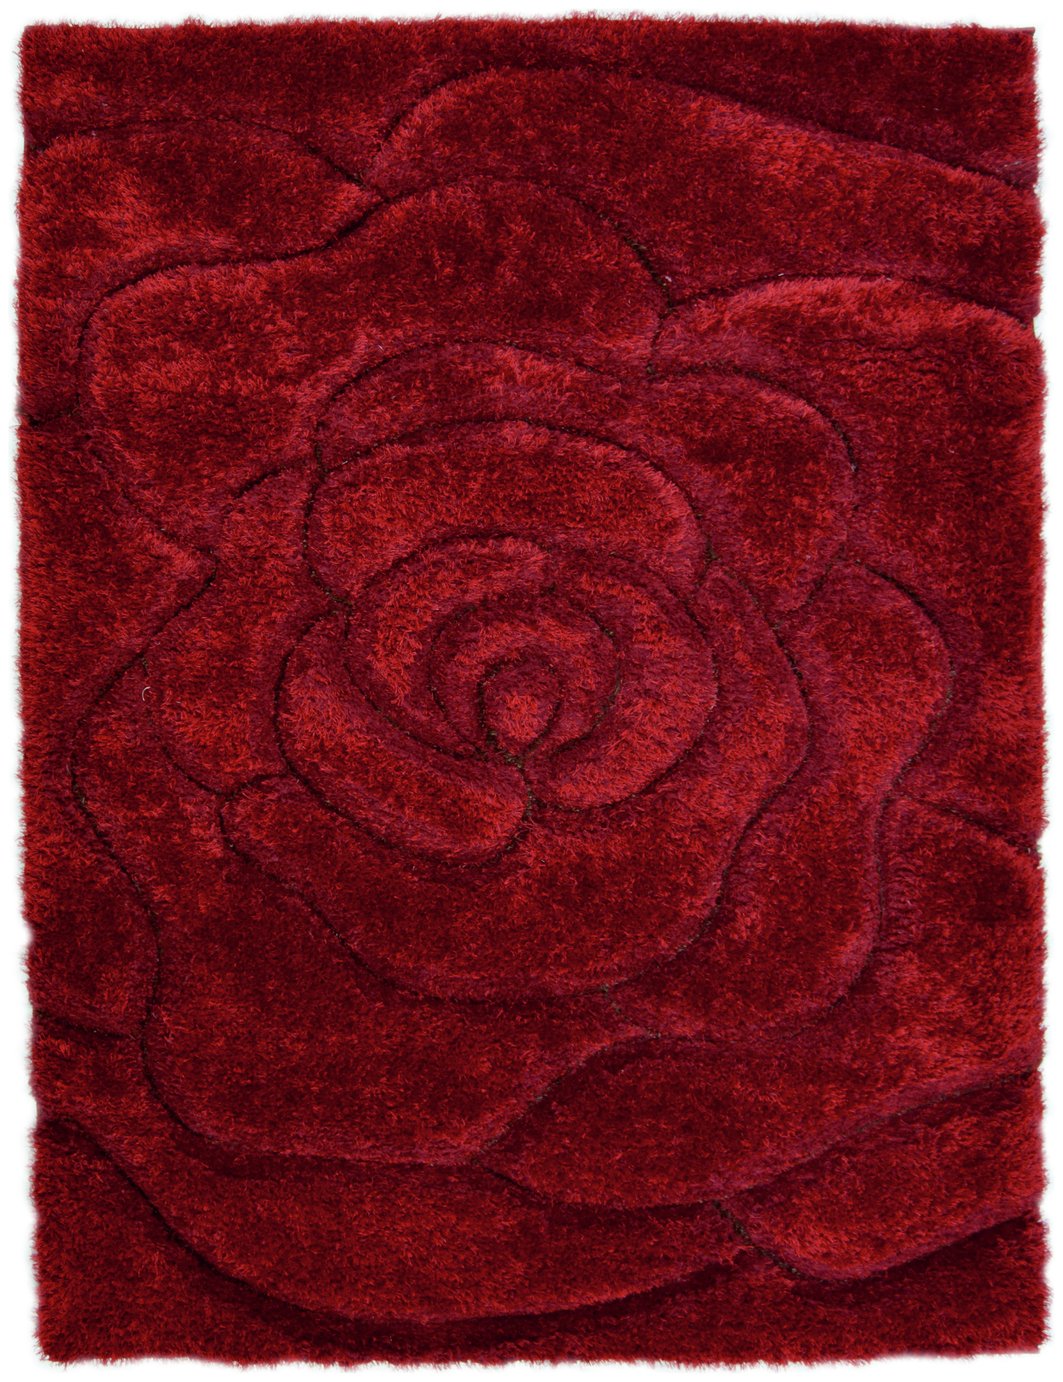 Fresno Rose Rug - 160x230cm - Red